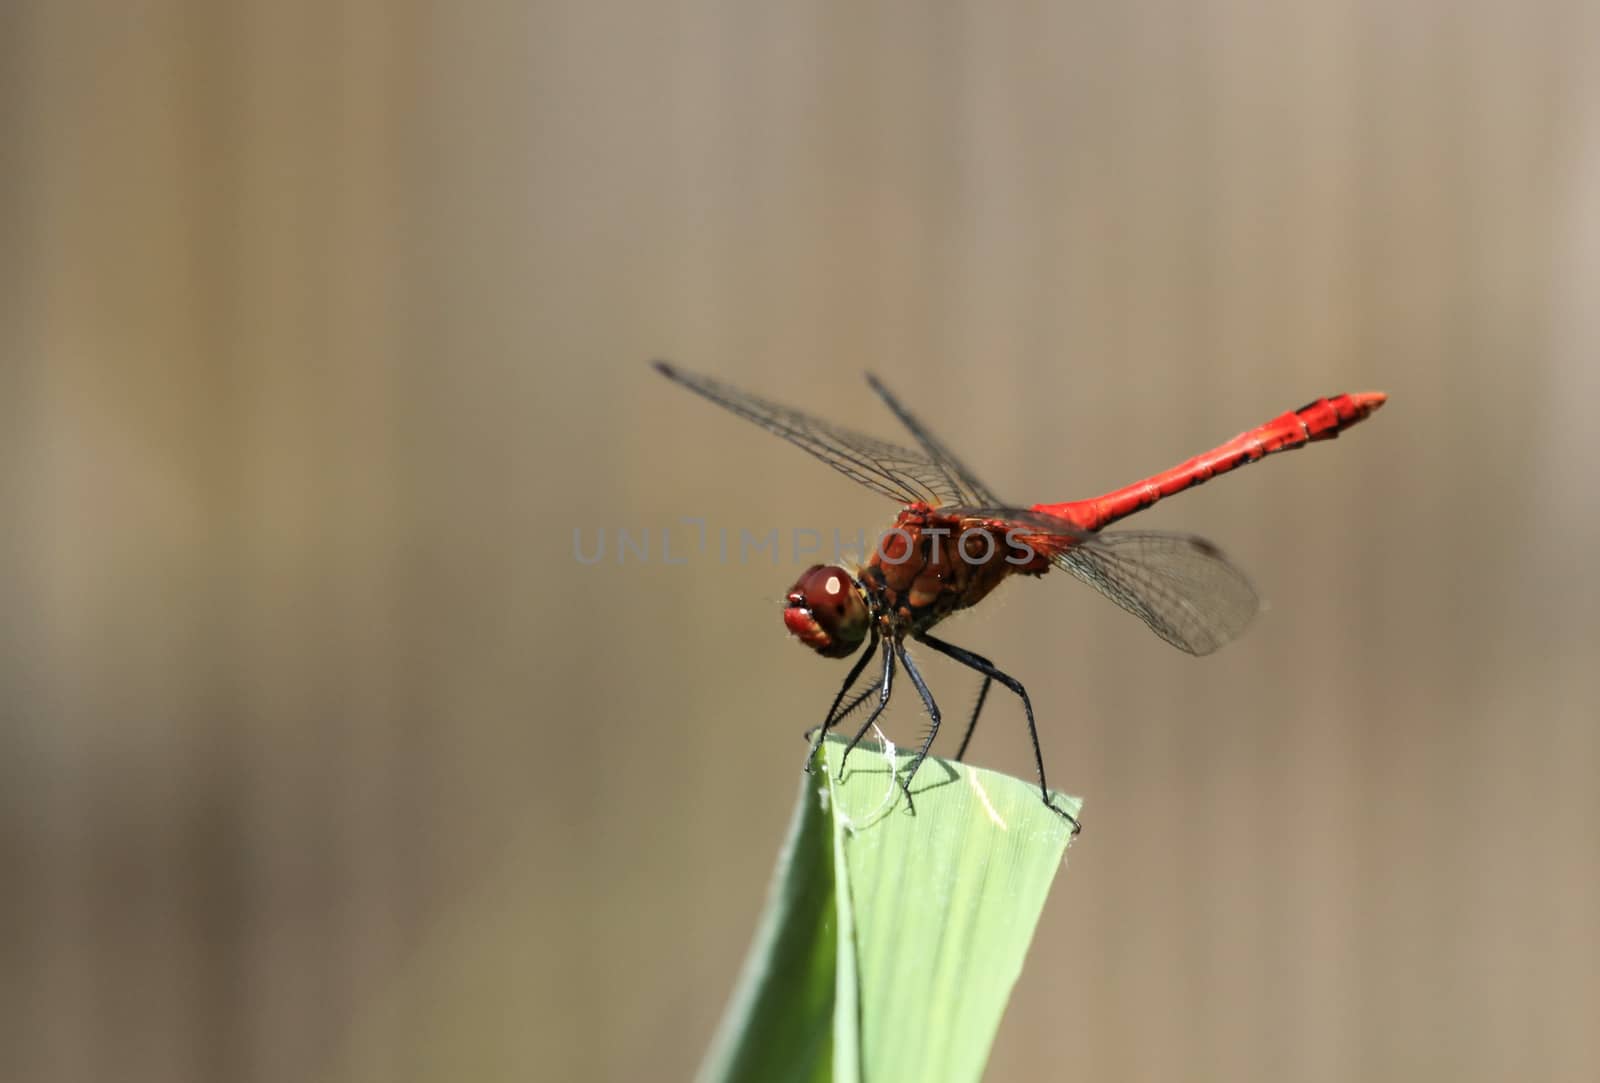 Red dragonfly, sympetrum, at rest on a big green leaf